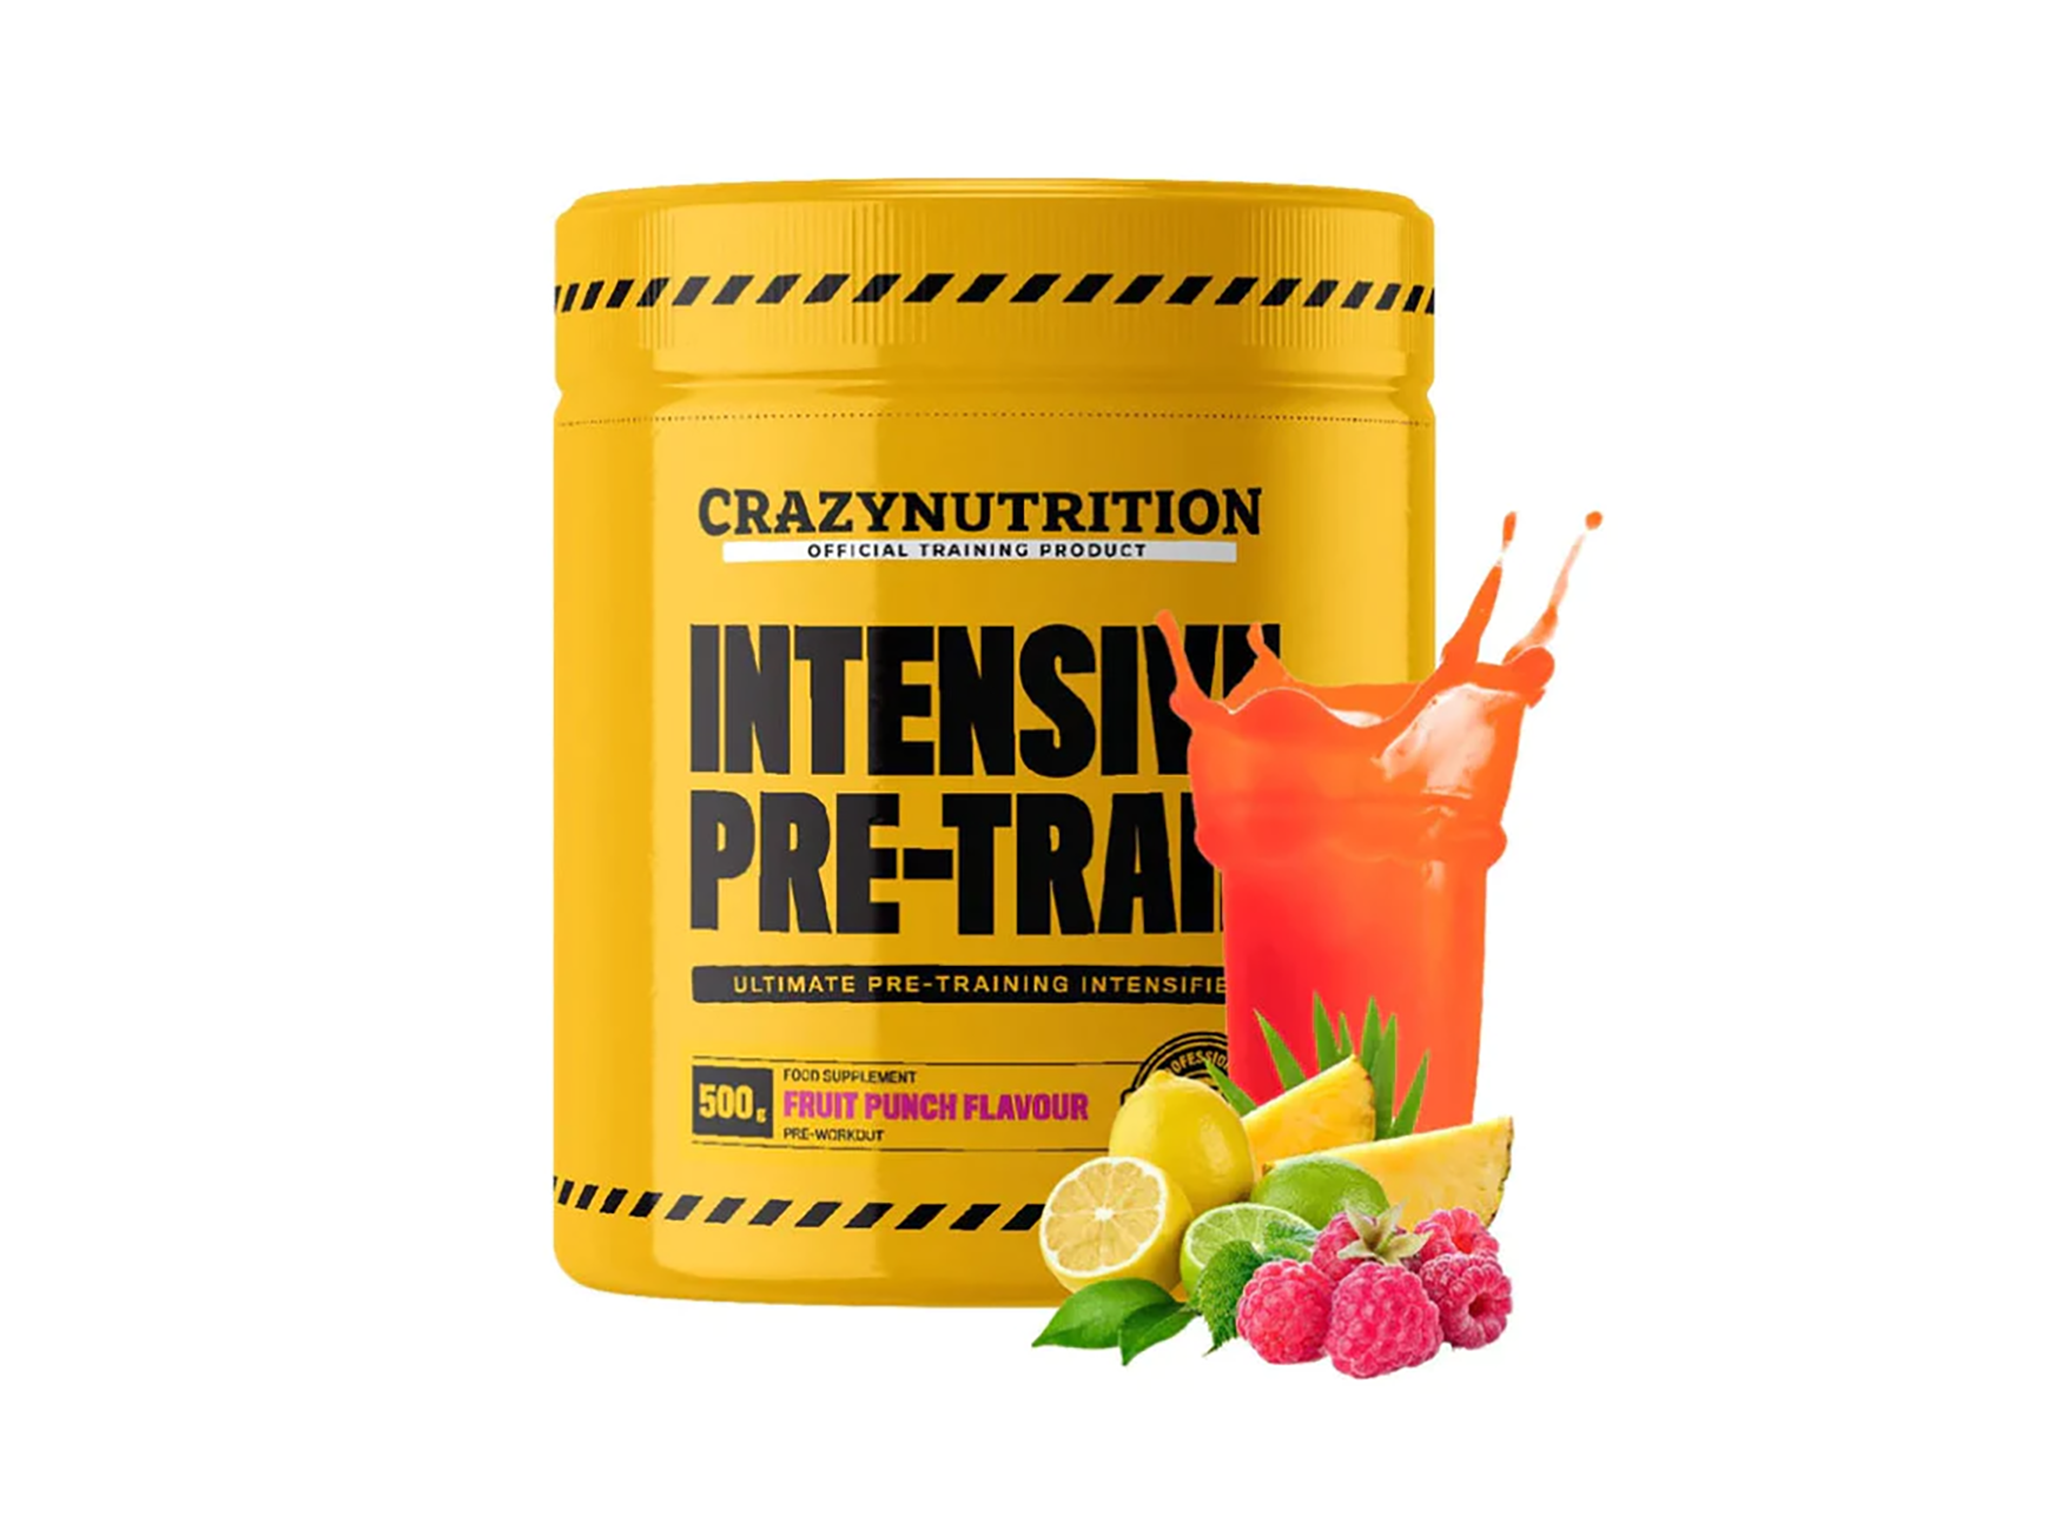 Crazy Nutrition intensive pre-train, 500g